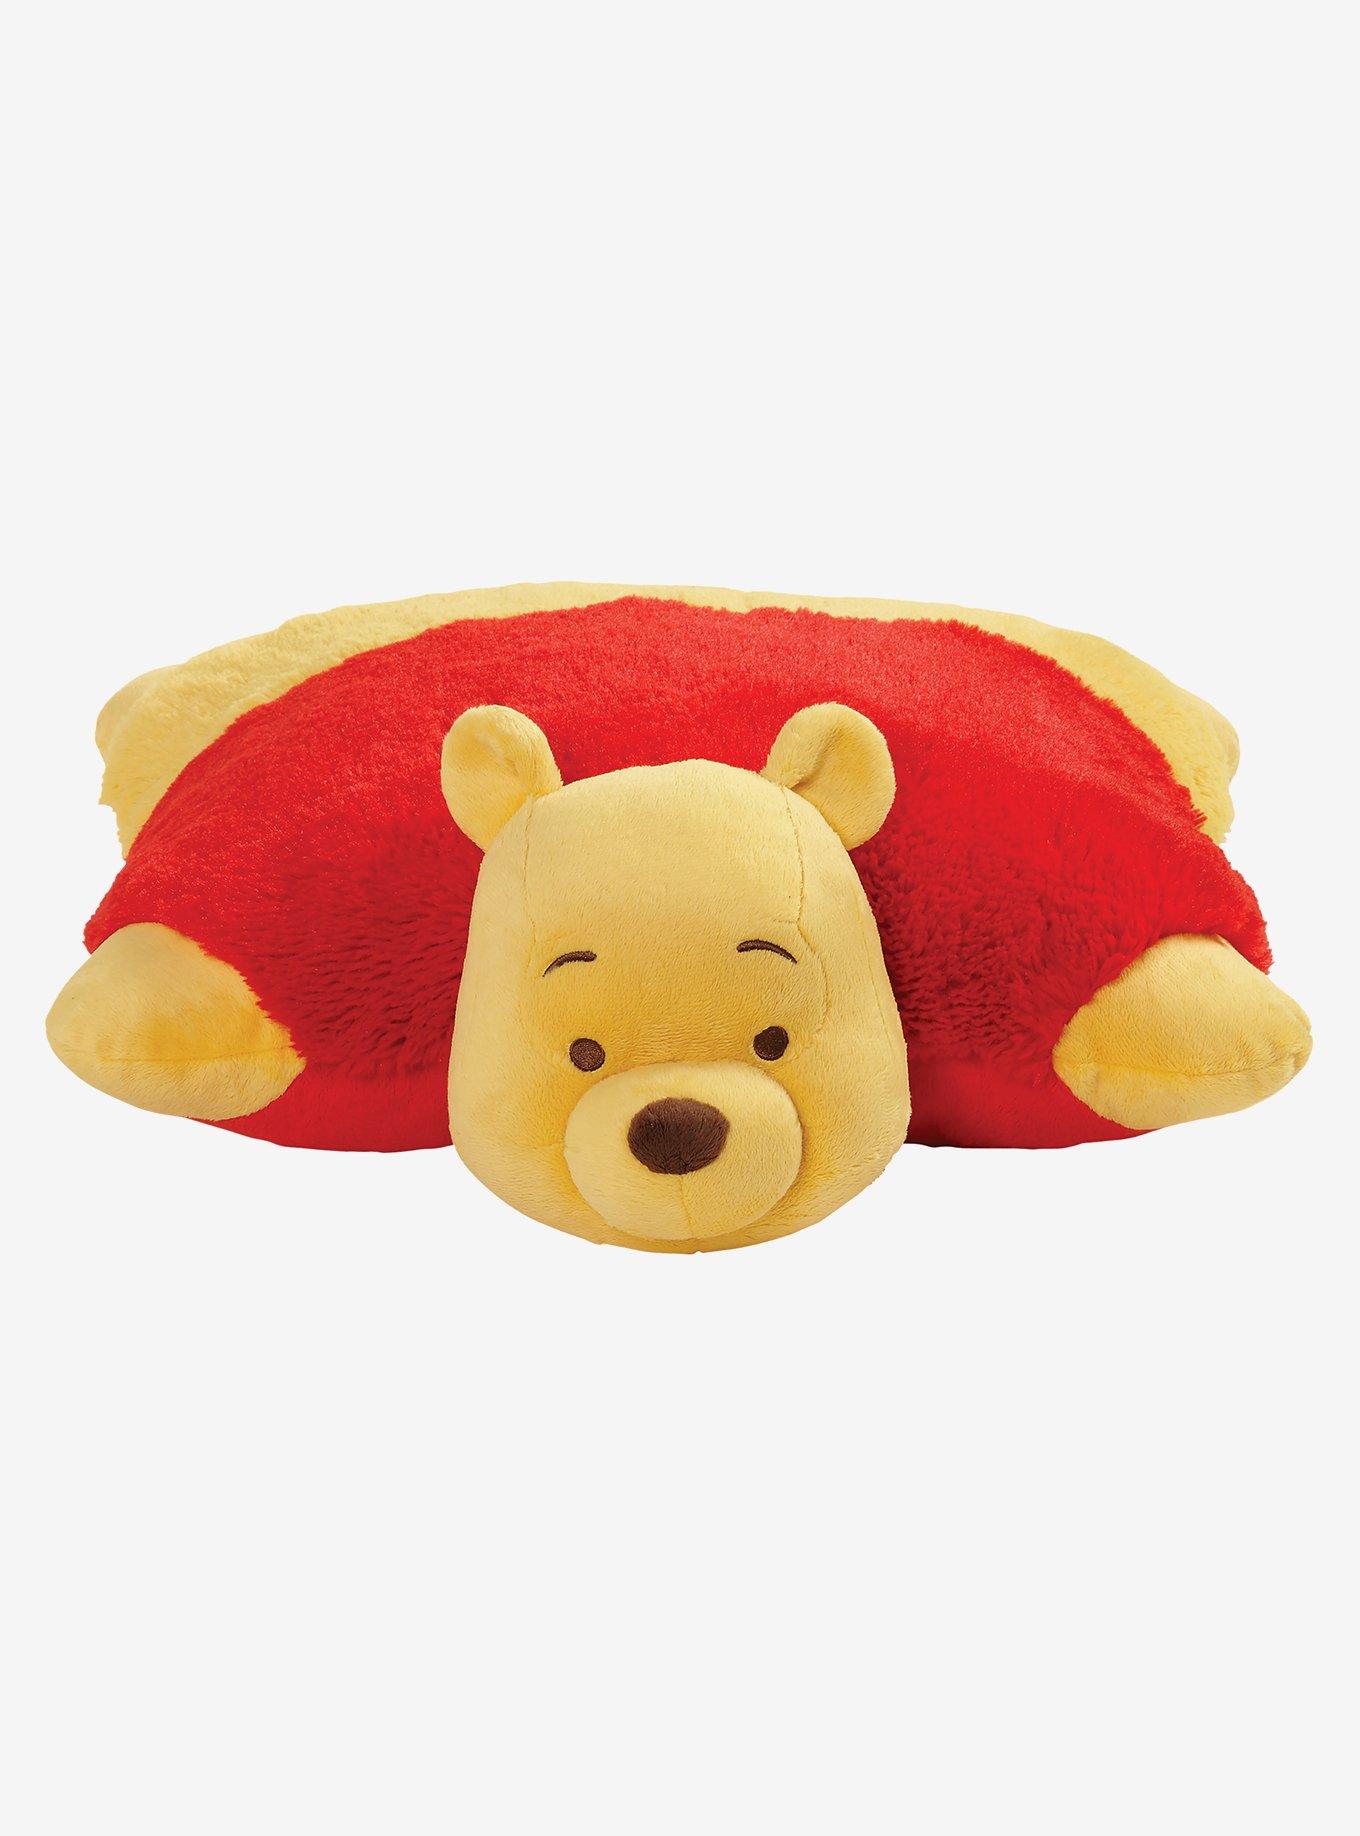 Disney Winnie The Pooh Pillow Pets Plush Toy